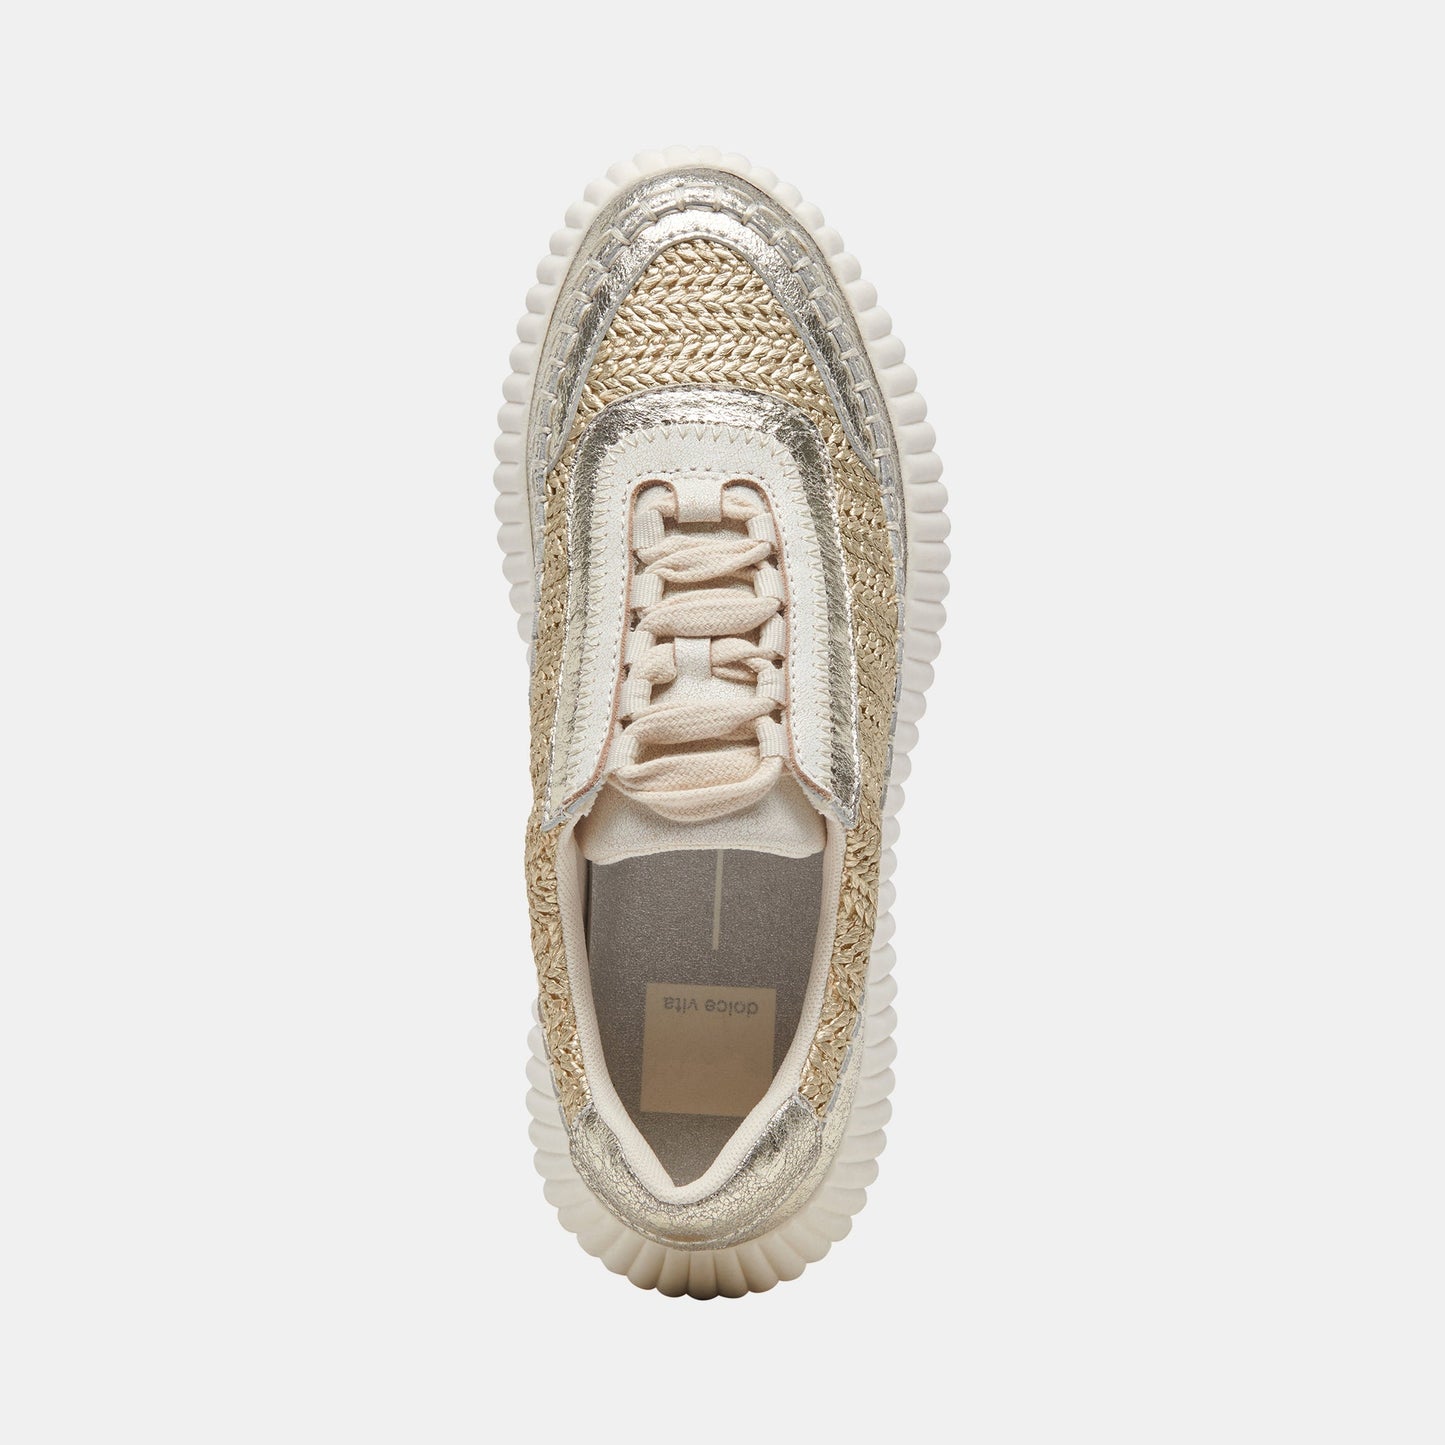 Dolce Vita "Dolen" Sneaker-Gold Knit